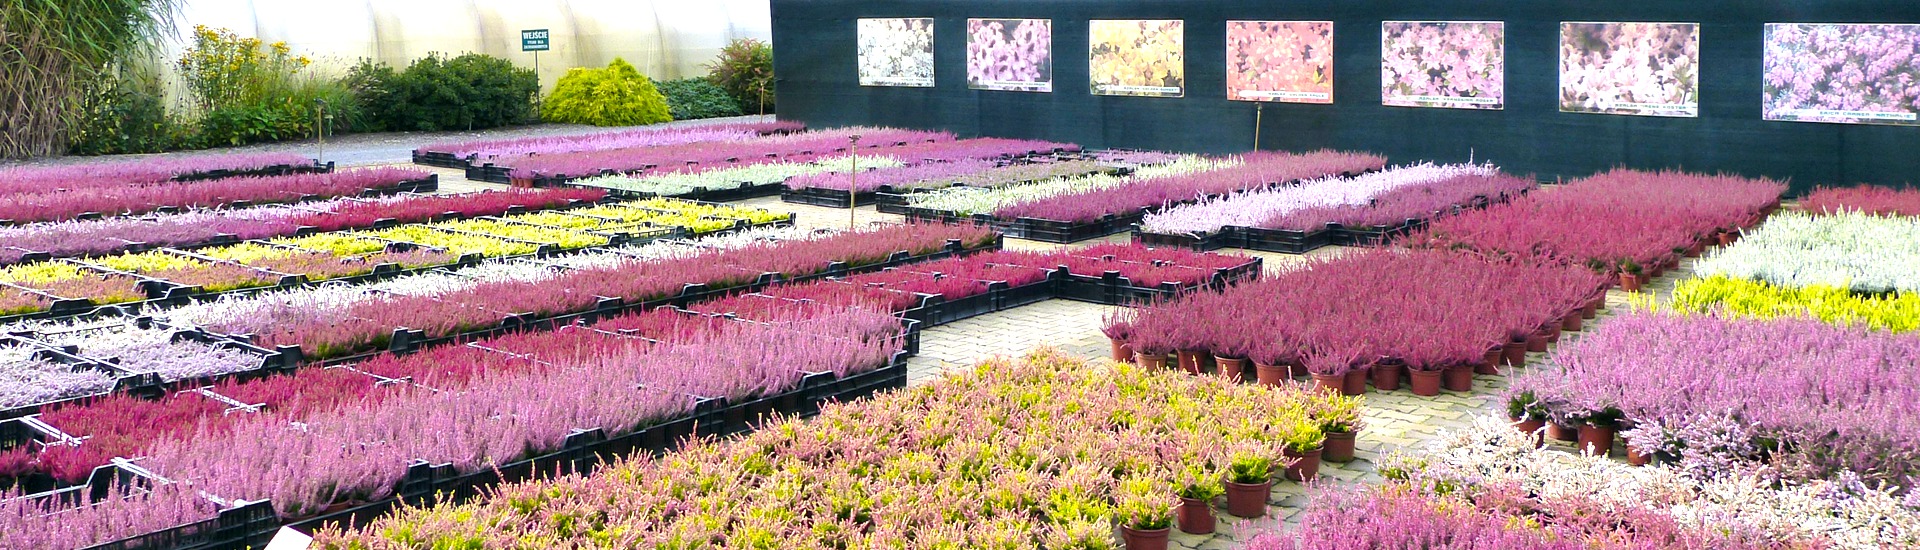 Nursery of heather plants, producer of seedlings of heather plants and Japanese azaleas - Poland